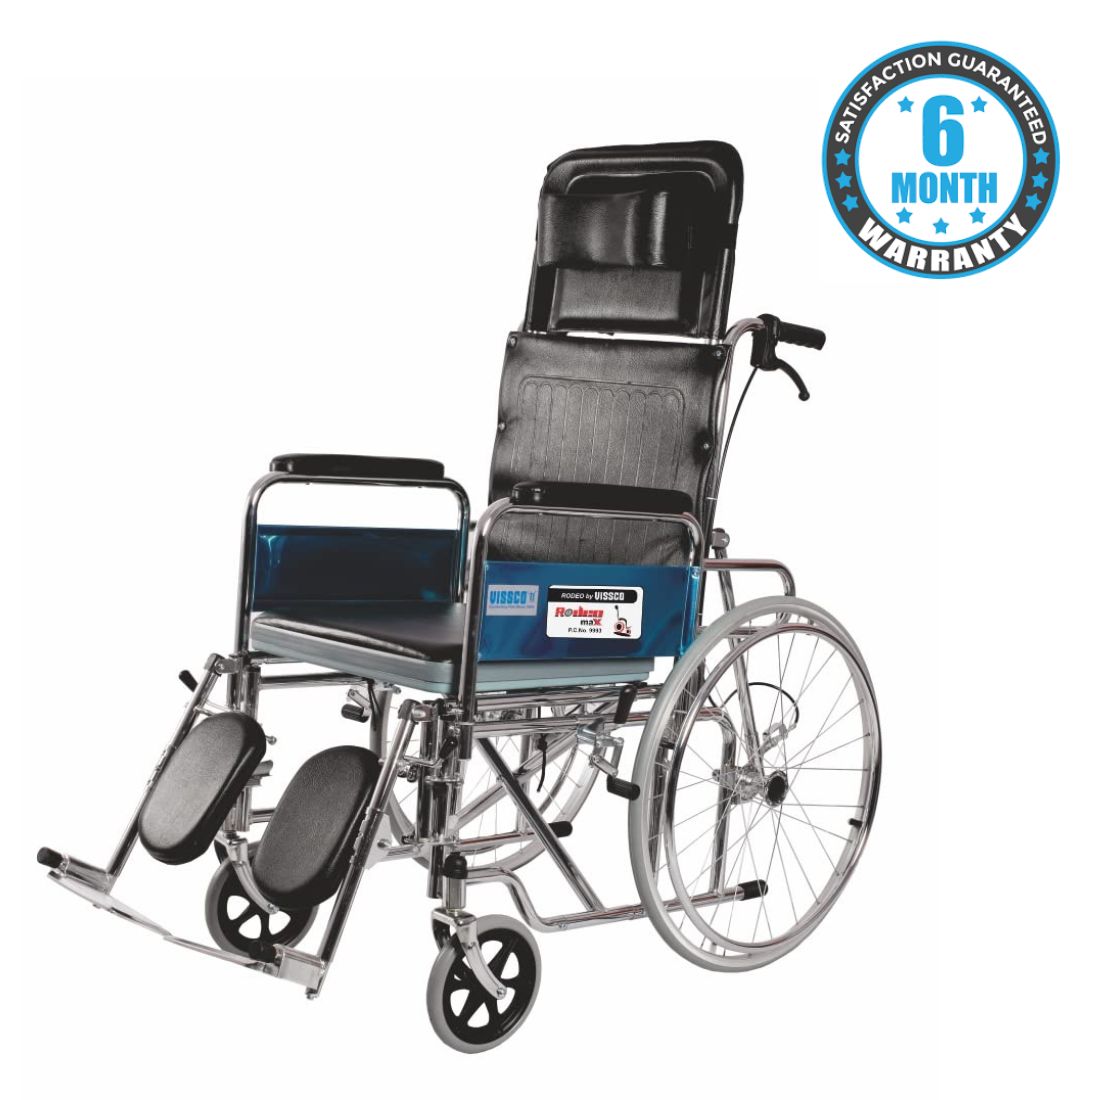 Folding Wheelchair for best price in chennai